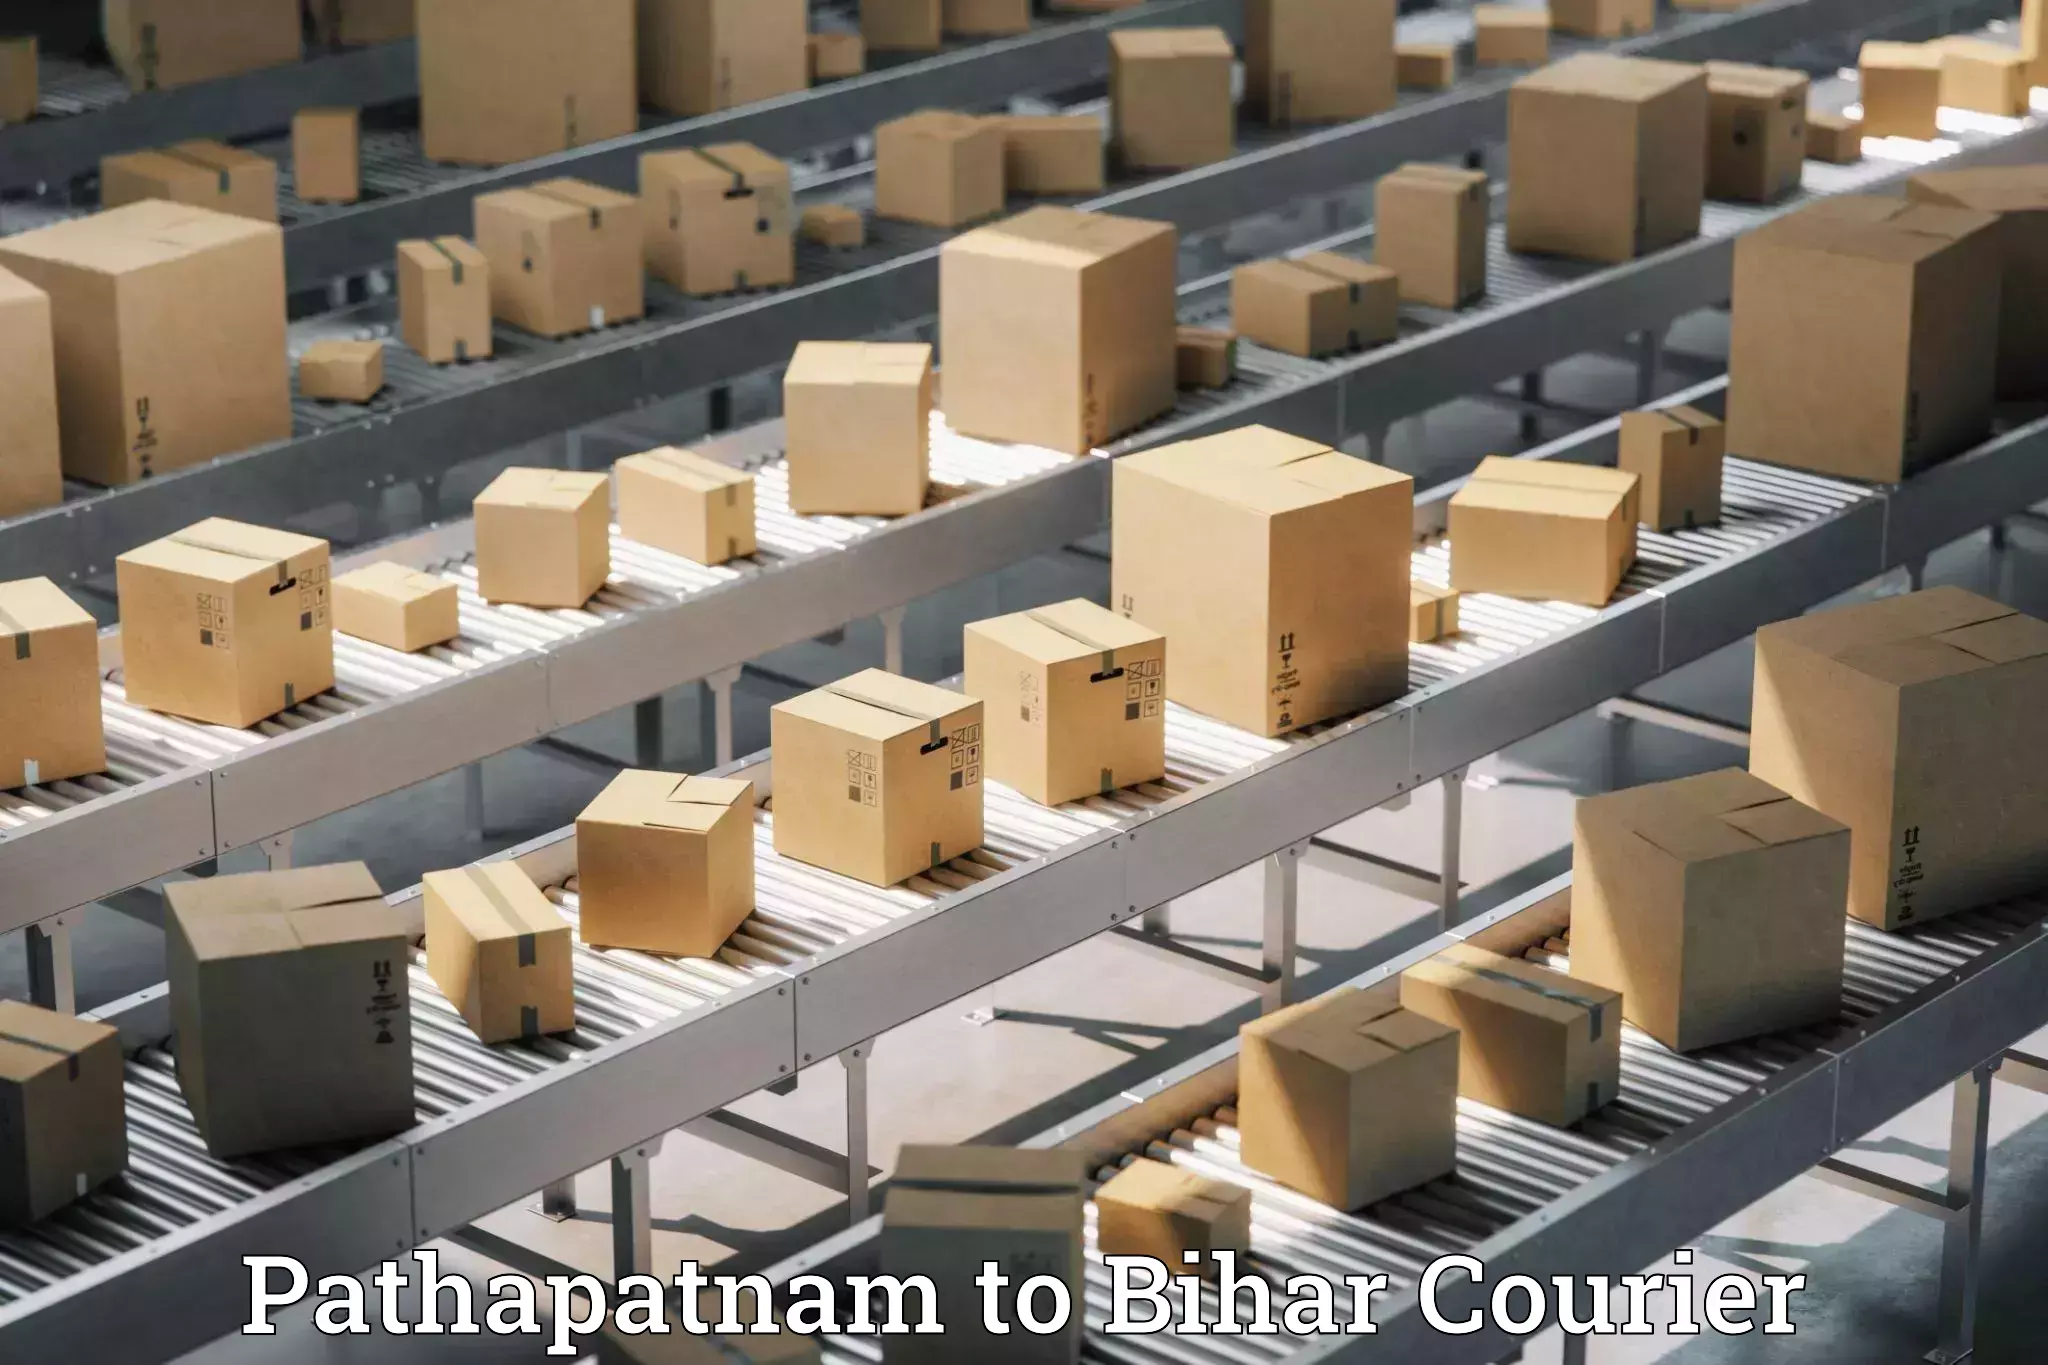 Courier service innovation Pathapatnam to Maranga